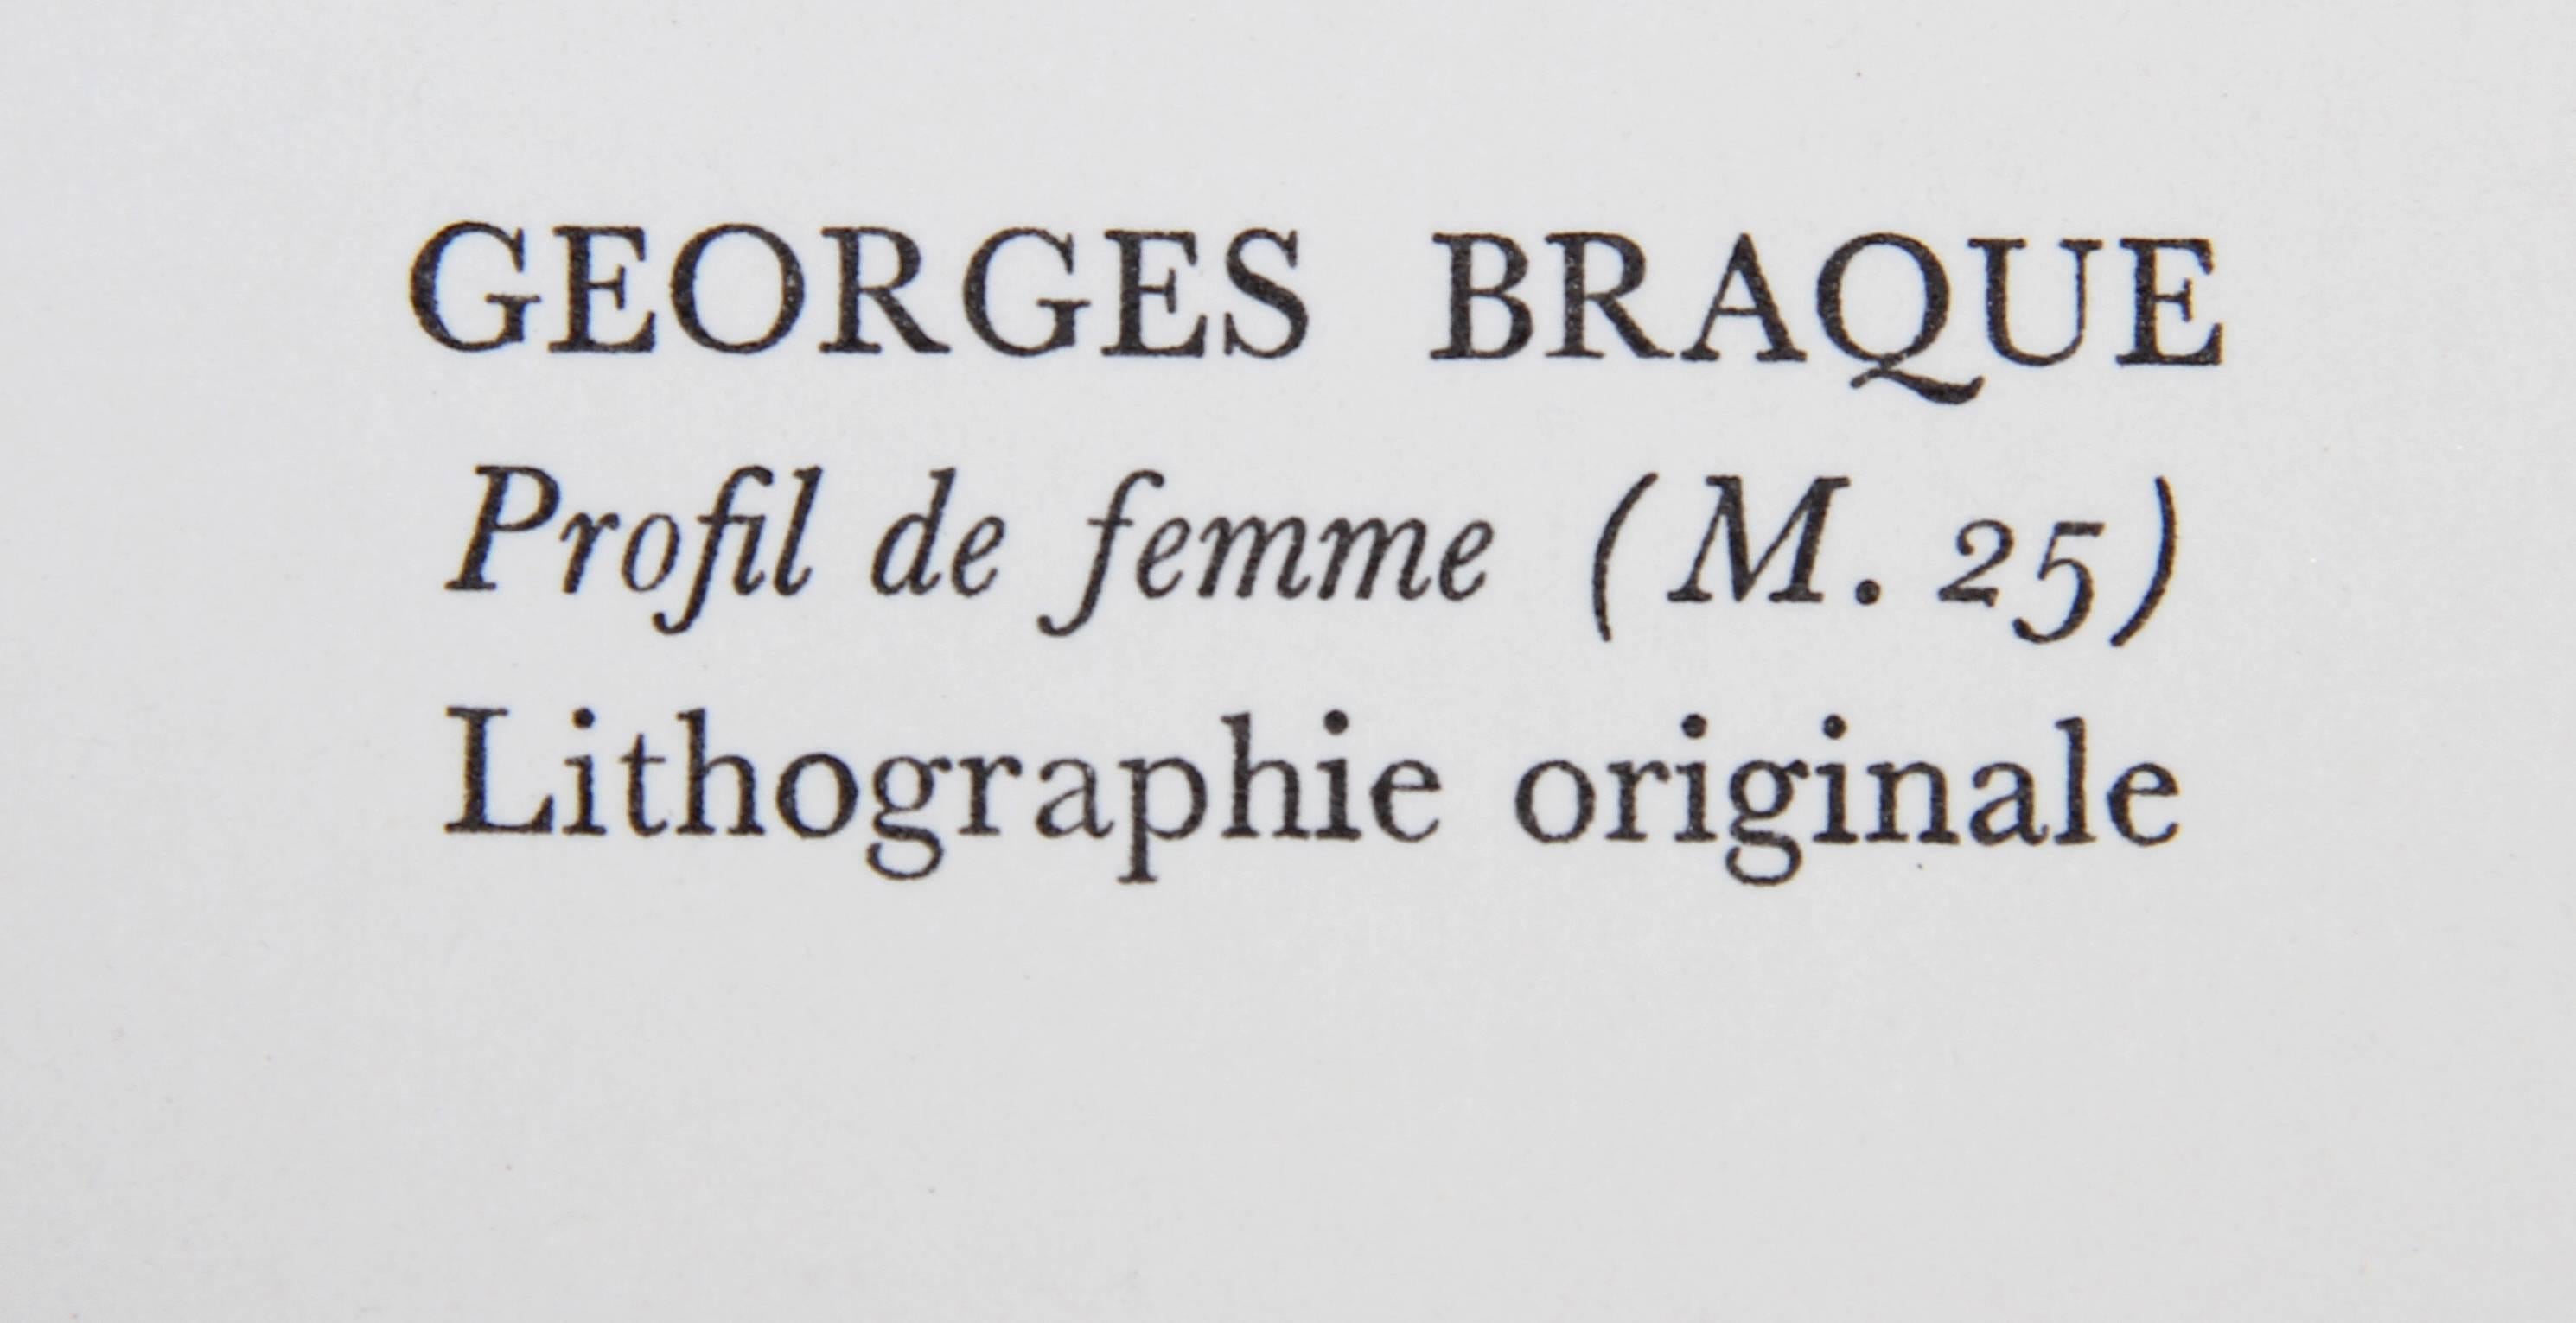 Artist: Georges Braque (after), French (1882 - 1963)
Title: Profil de Femme from Souvenirs de Portraits d'Artistes. Jacques Prévert: Le Coeur à l'ouvrage (M.25)
Year: 1972
Medium: Lithograph, signed in the plate
Edition: 800
Image Size: 8 x 5.5